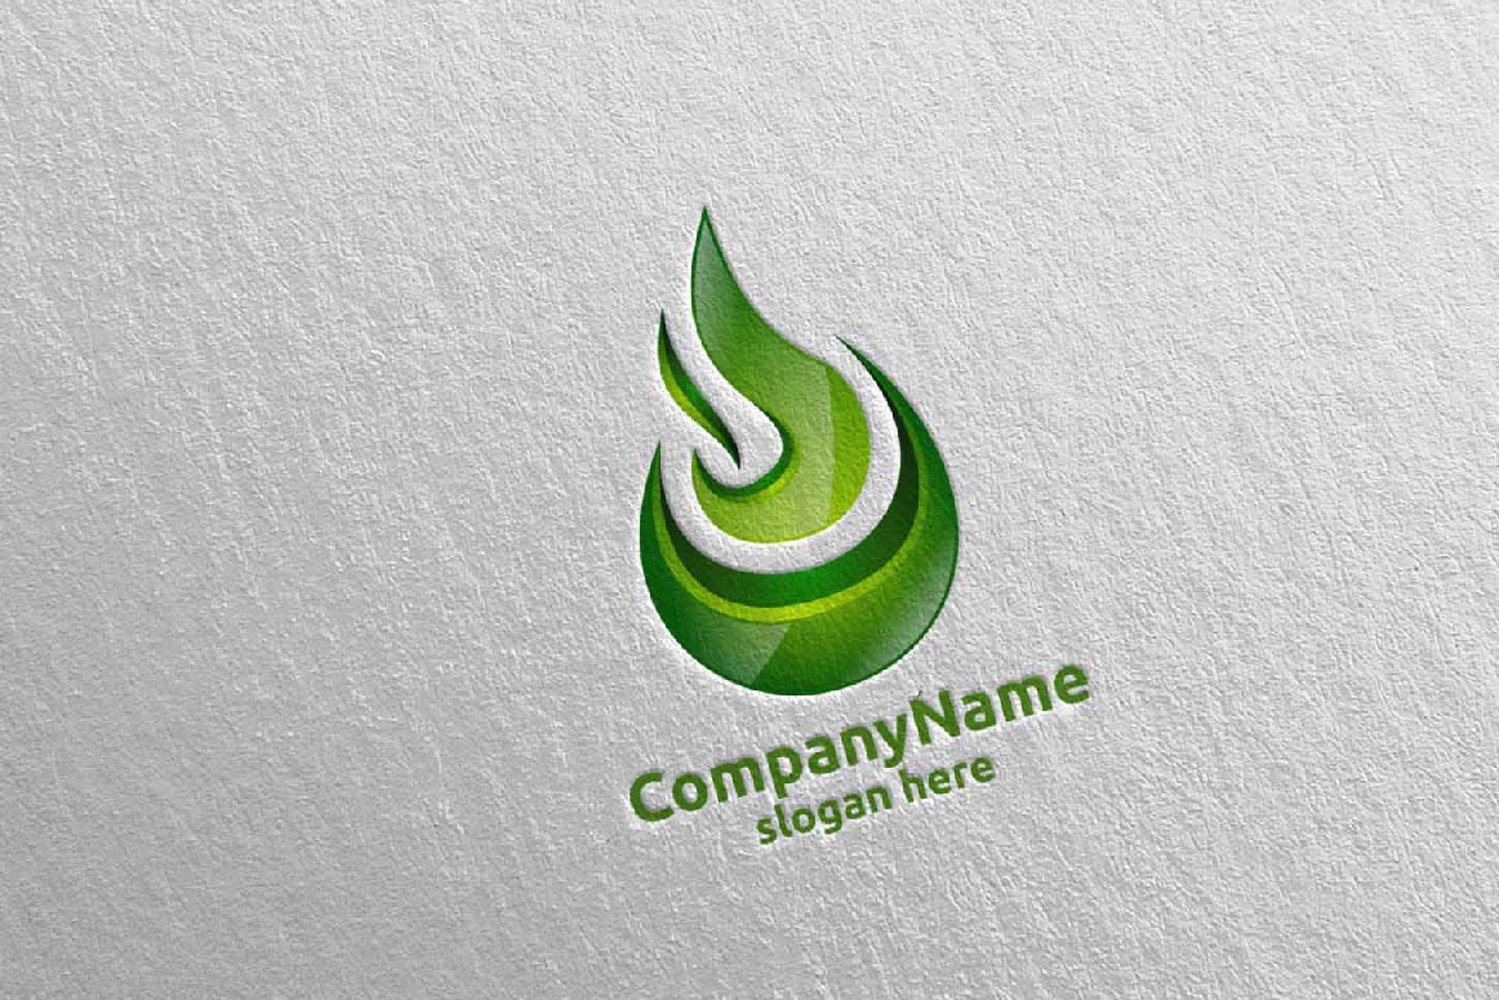 Green modern concept logo with fire shape.